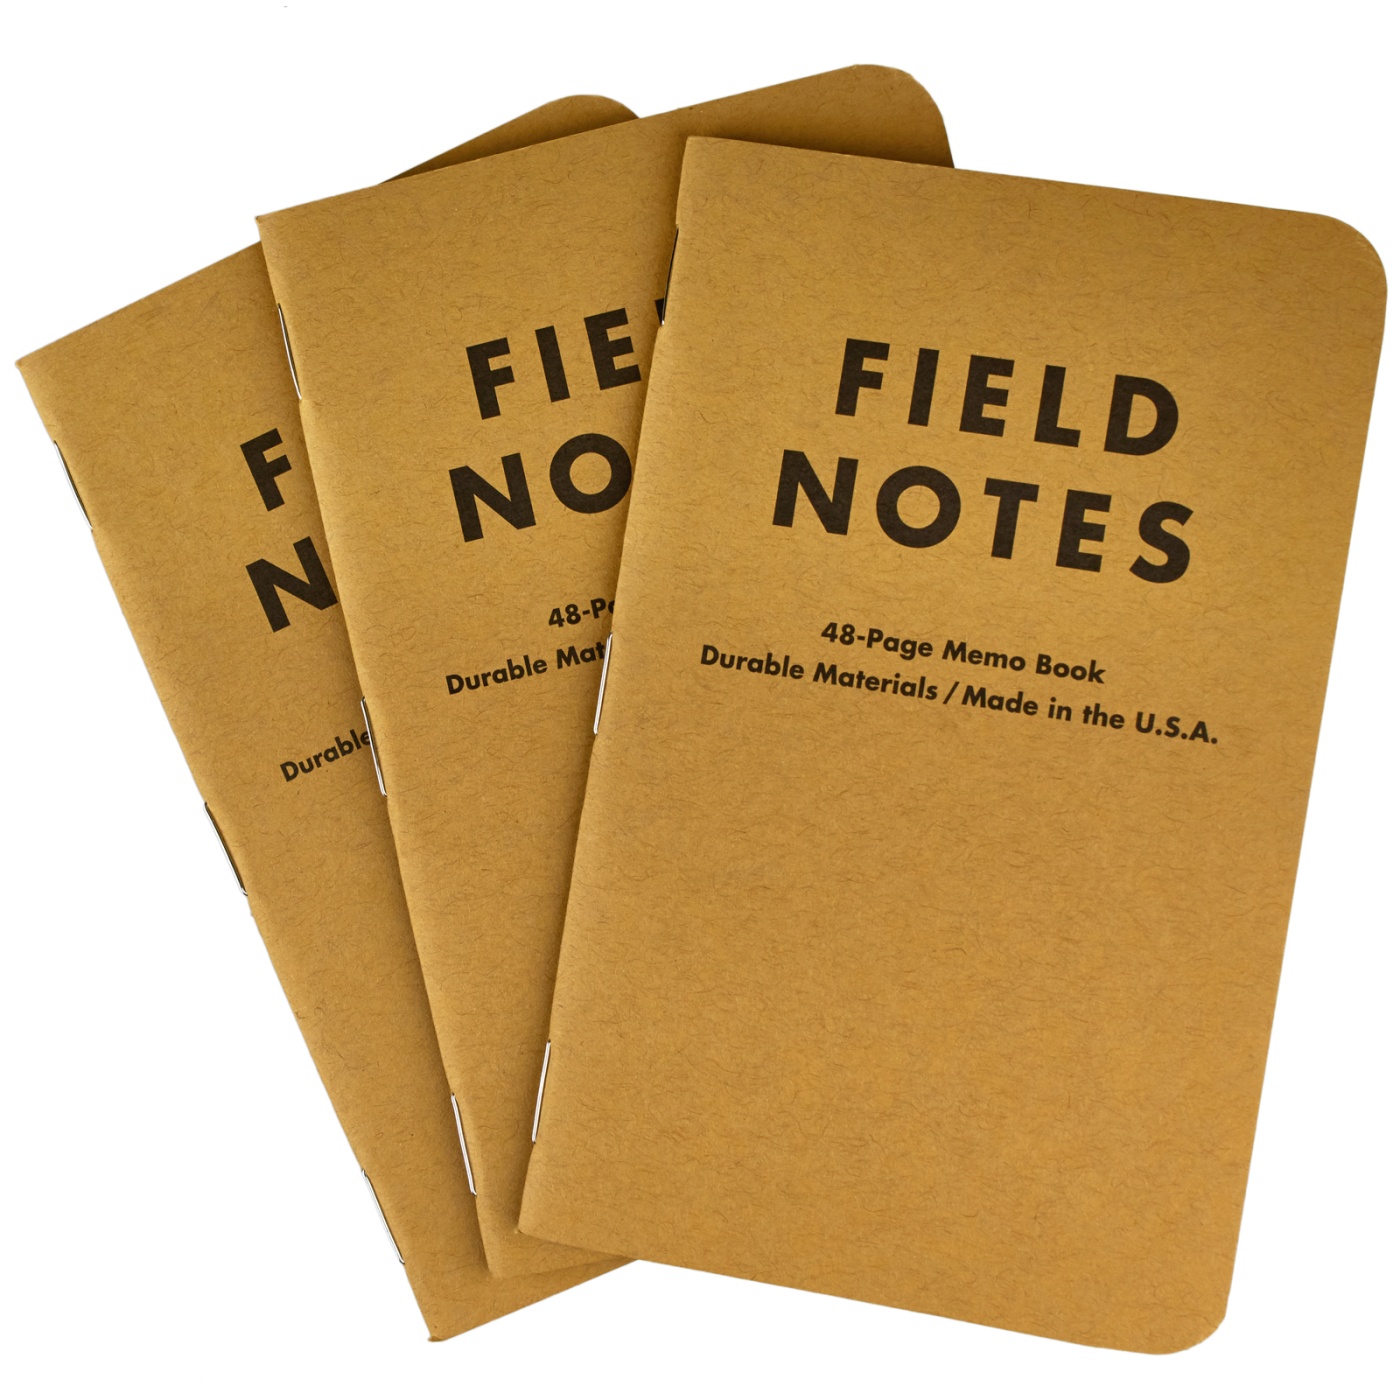 Memo Book Ruled 3-pack in the group Paper & Pads / Note & Memo / Writing & Memo Pads at Pen Store (101423)